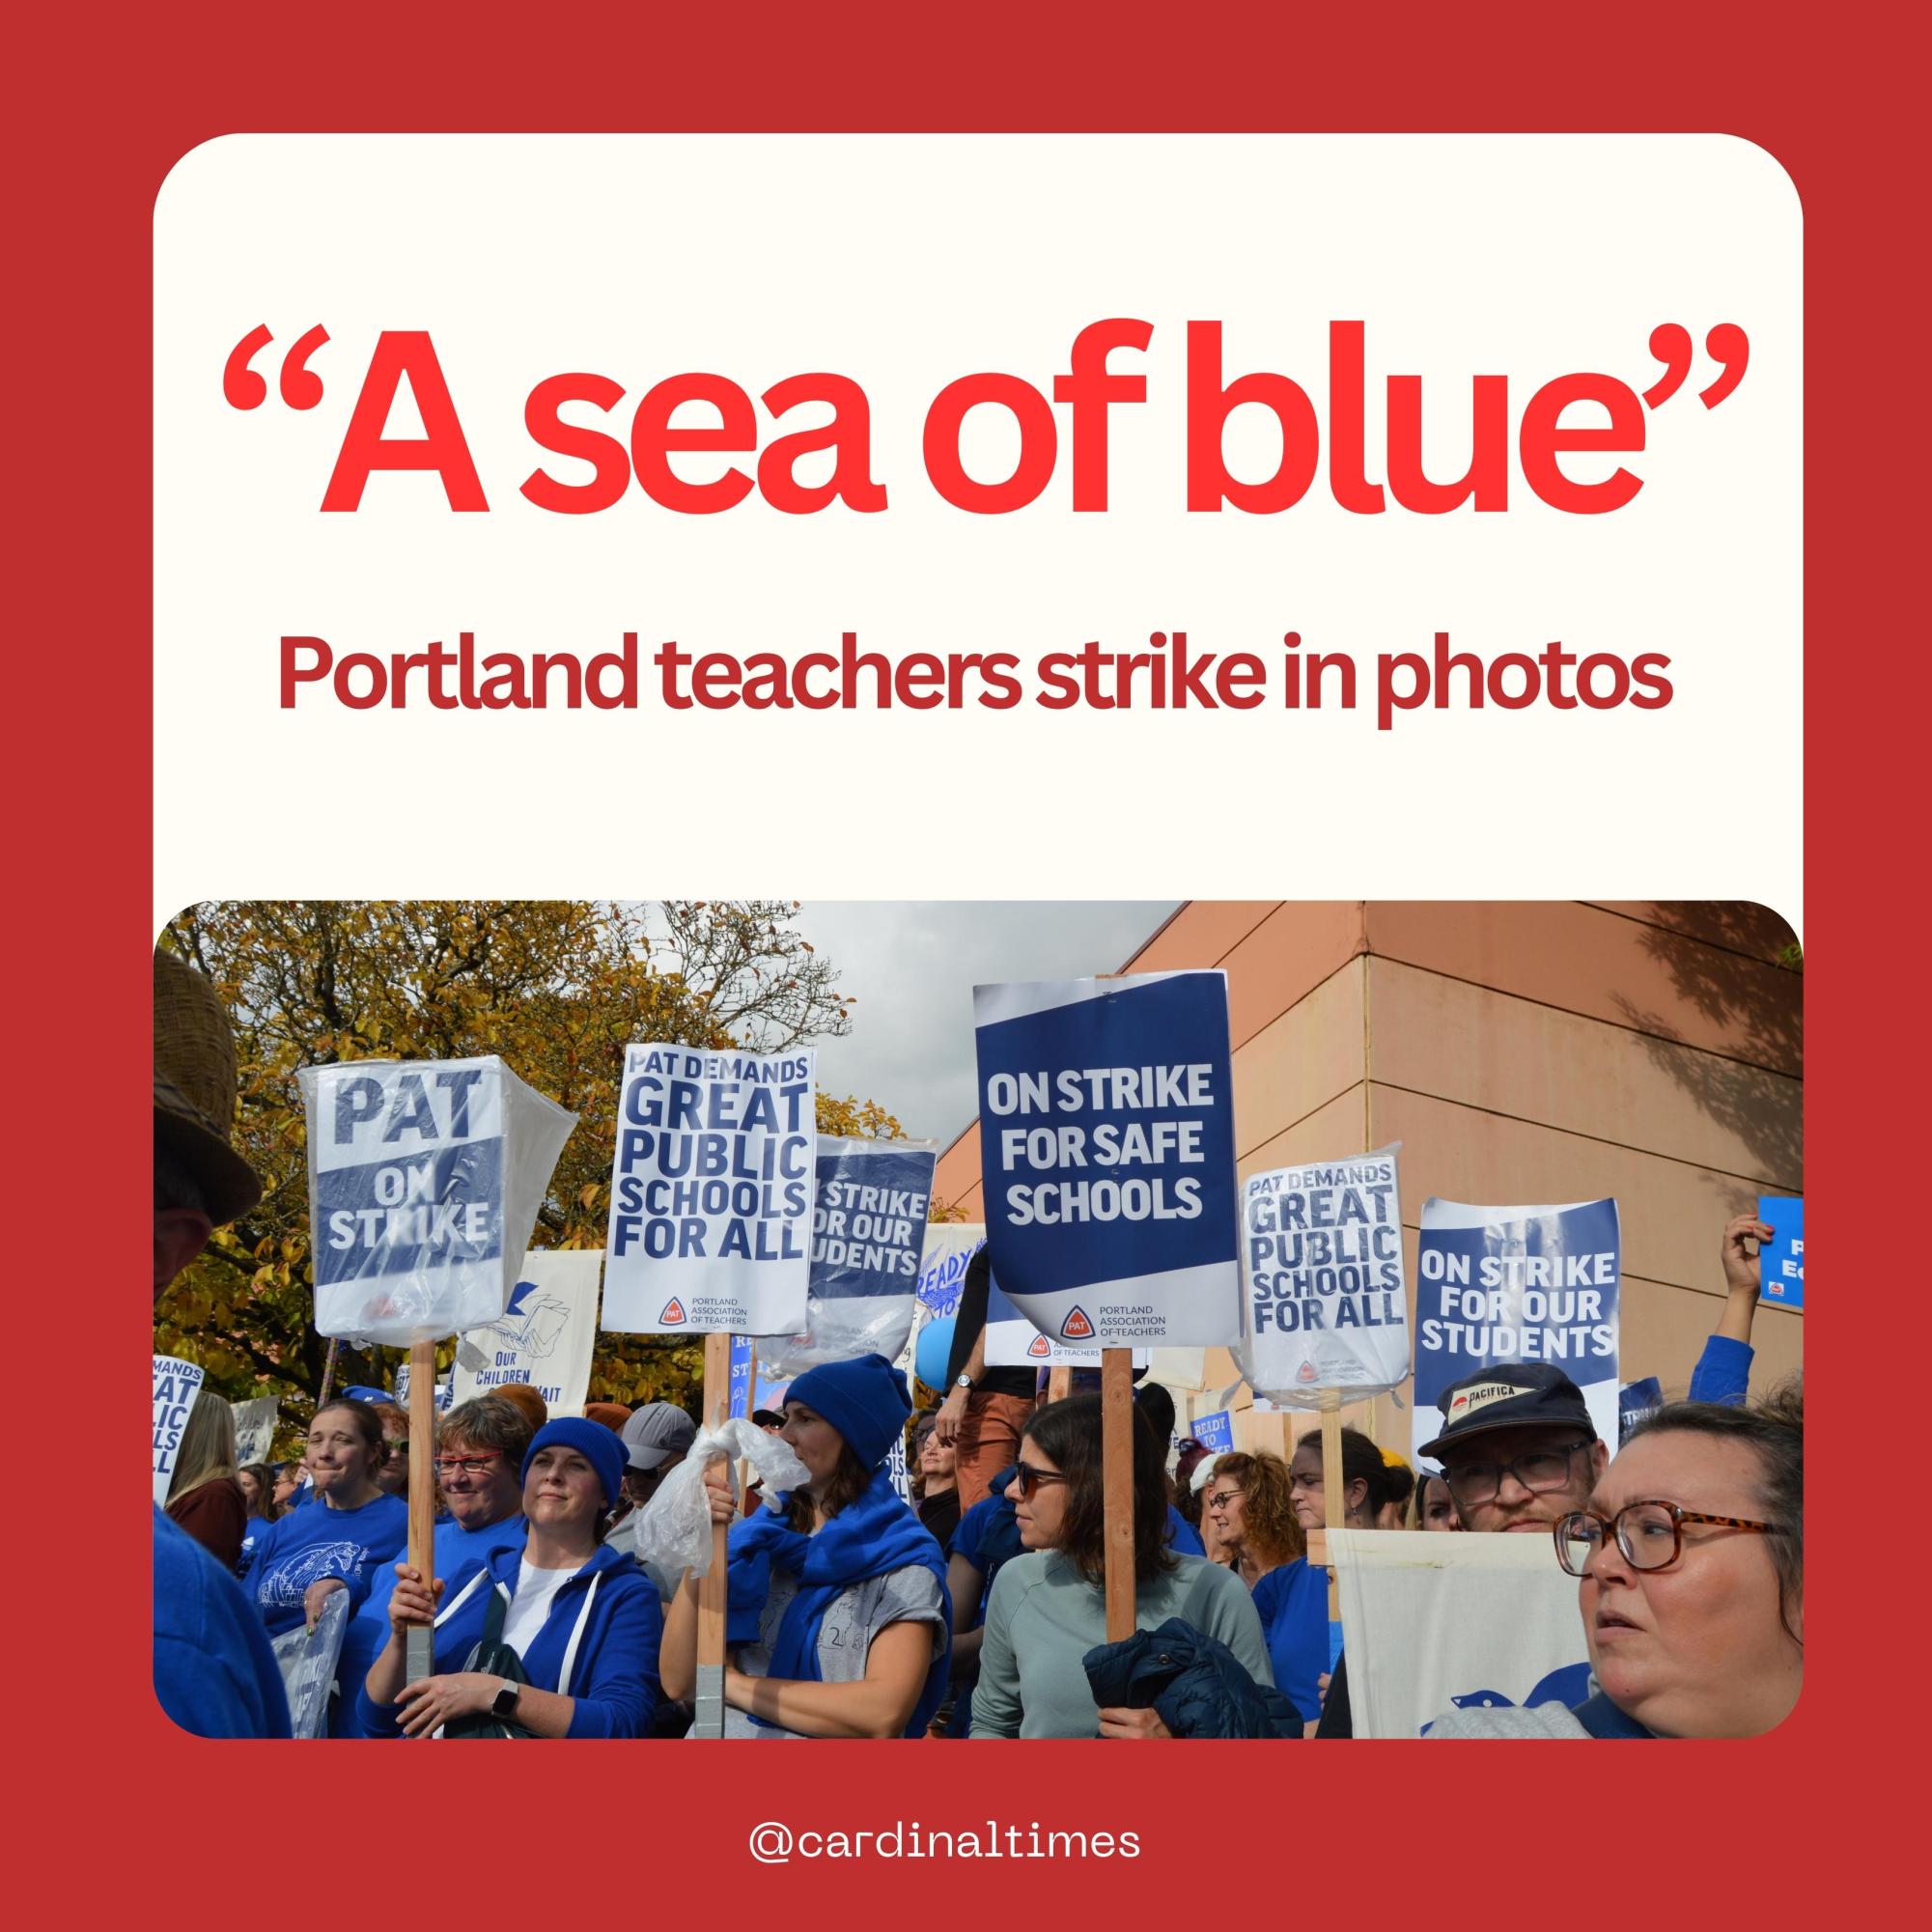 A sea of blue - Portland teachers strike in photos